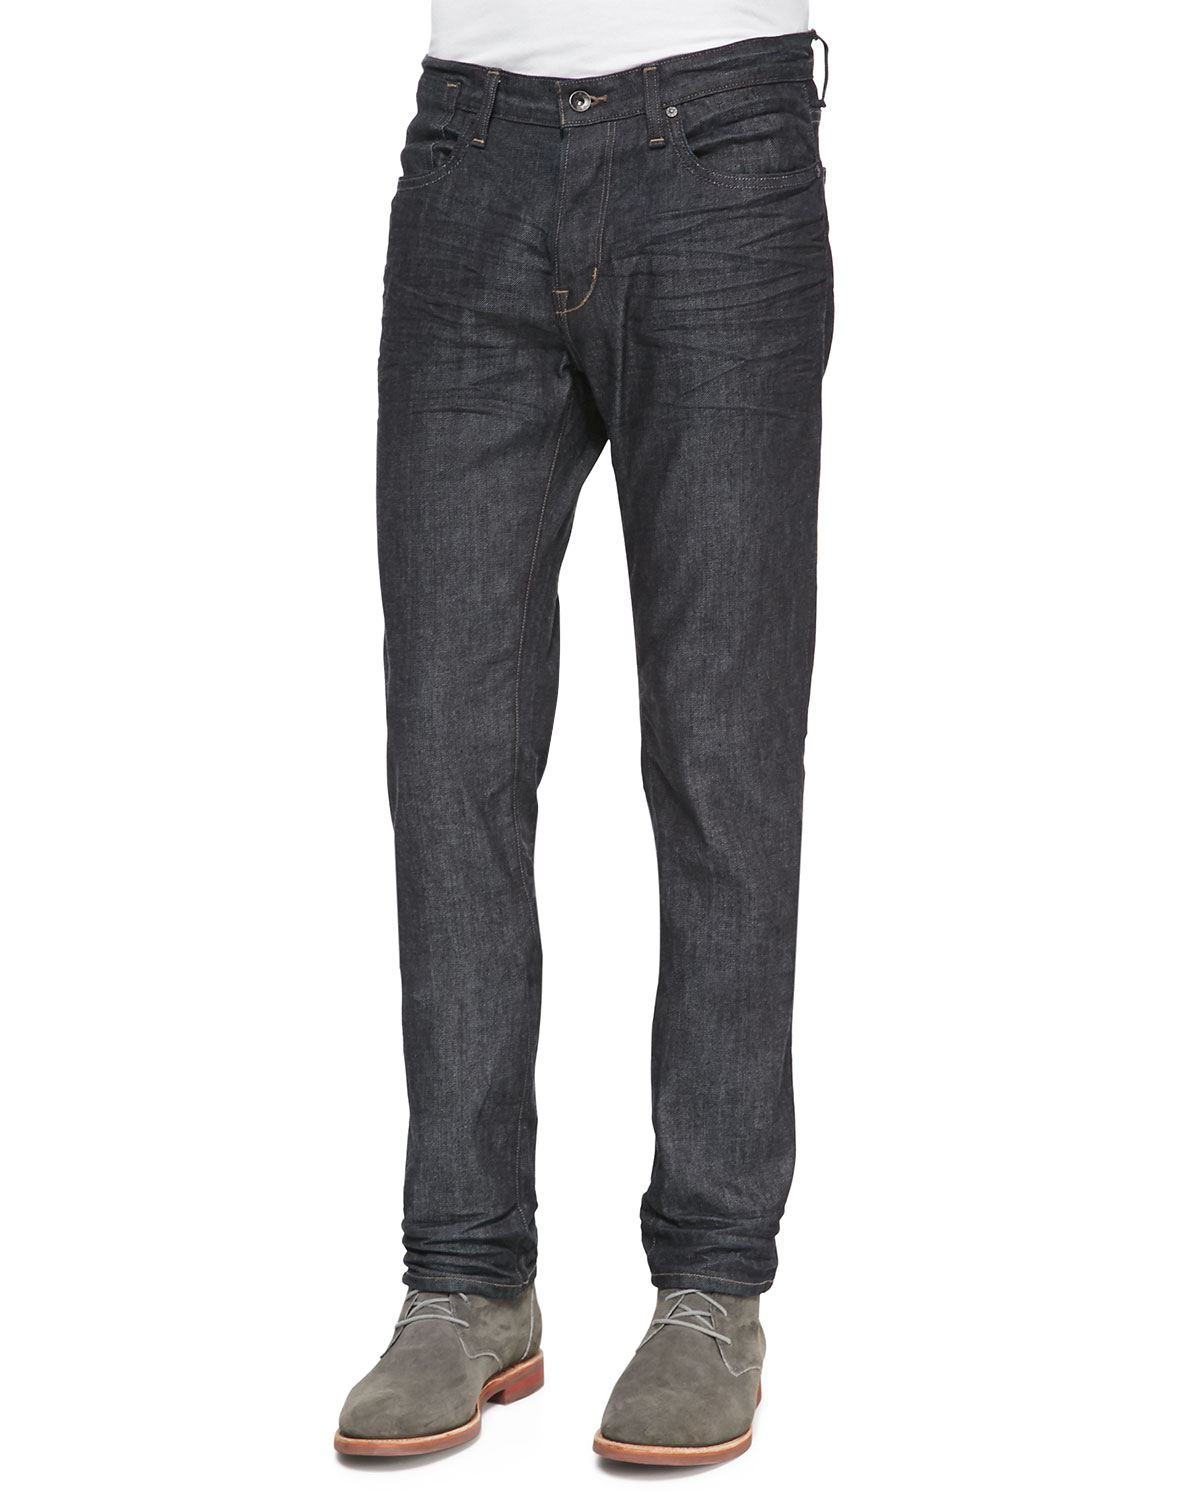 Lyst - John Varvatos Bowery Slim-fit Denim Jeans in Blue for Men